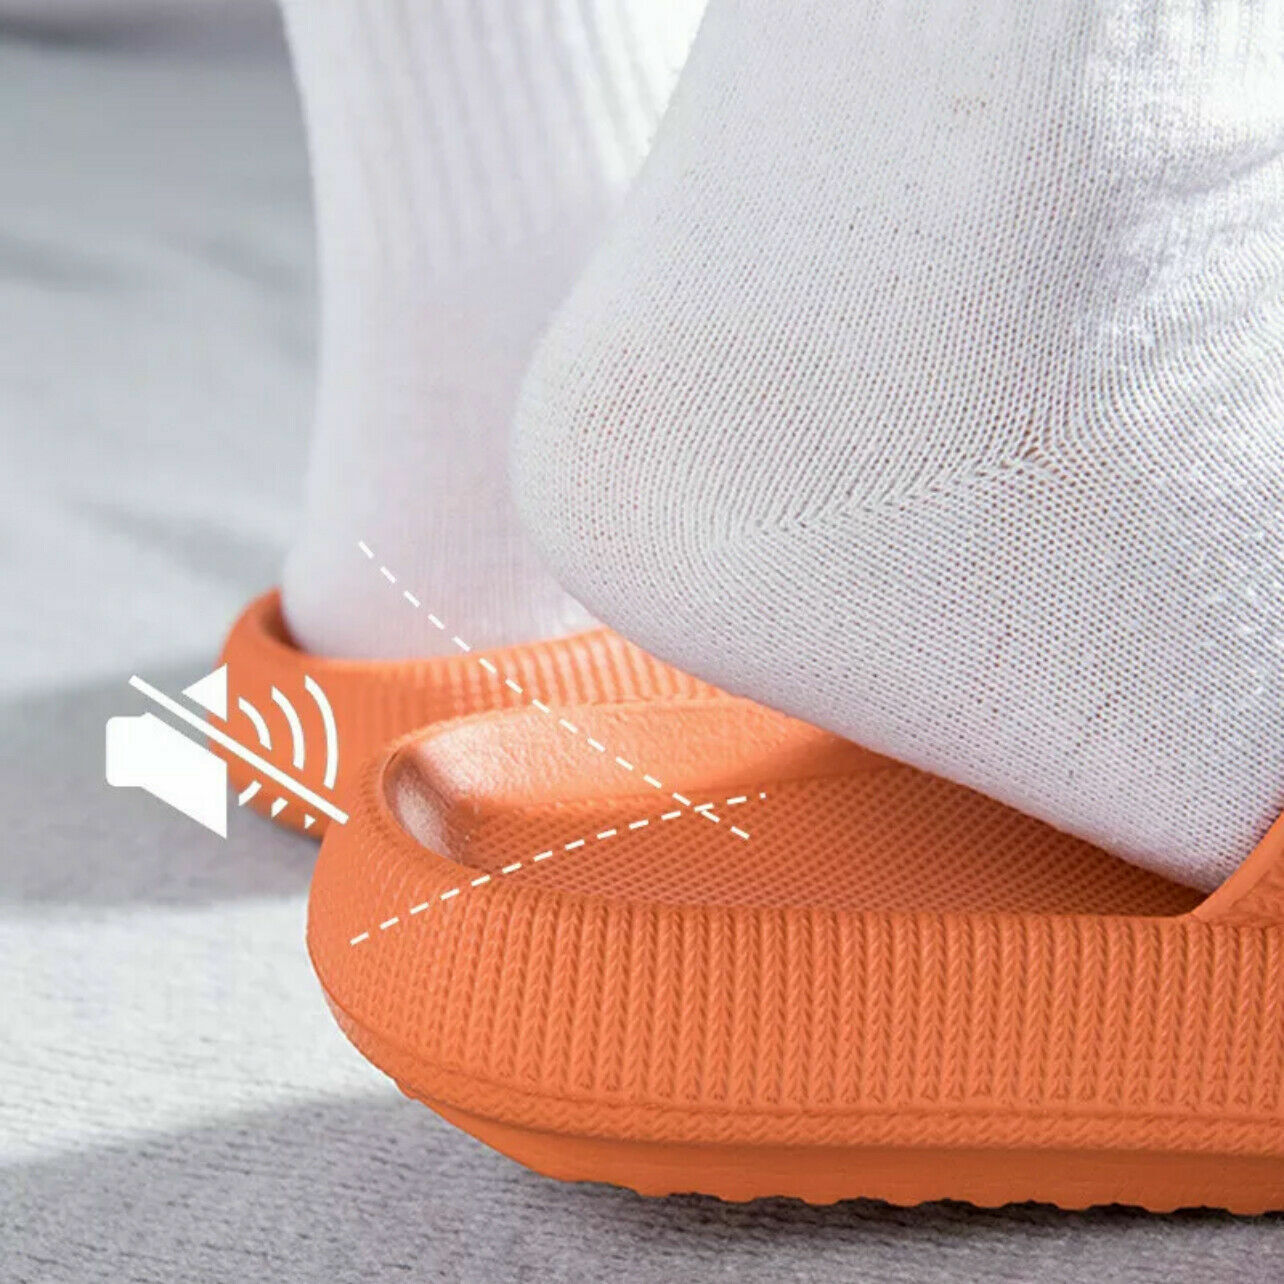 Ultra-Soft Anti-Slip PILLOW SLIDES Sandals Slippers Extra Soft Cloud Shoes AU